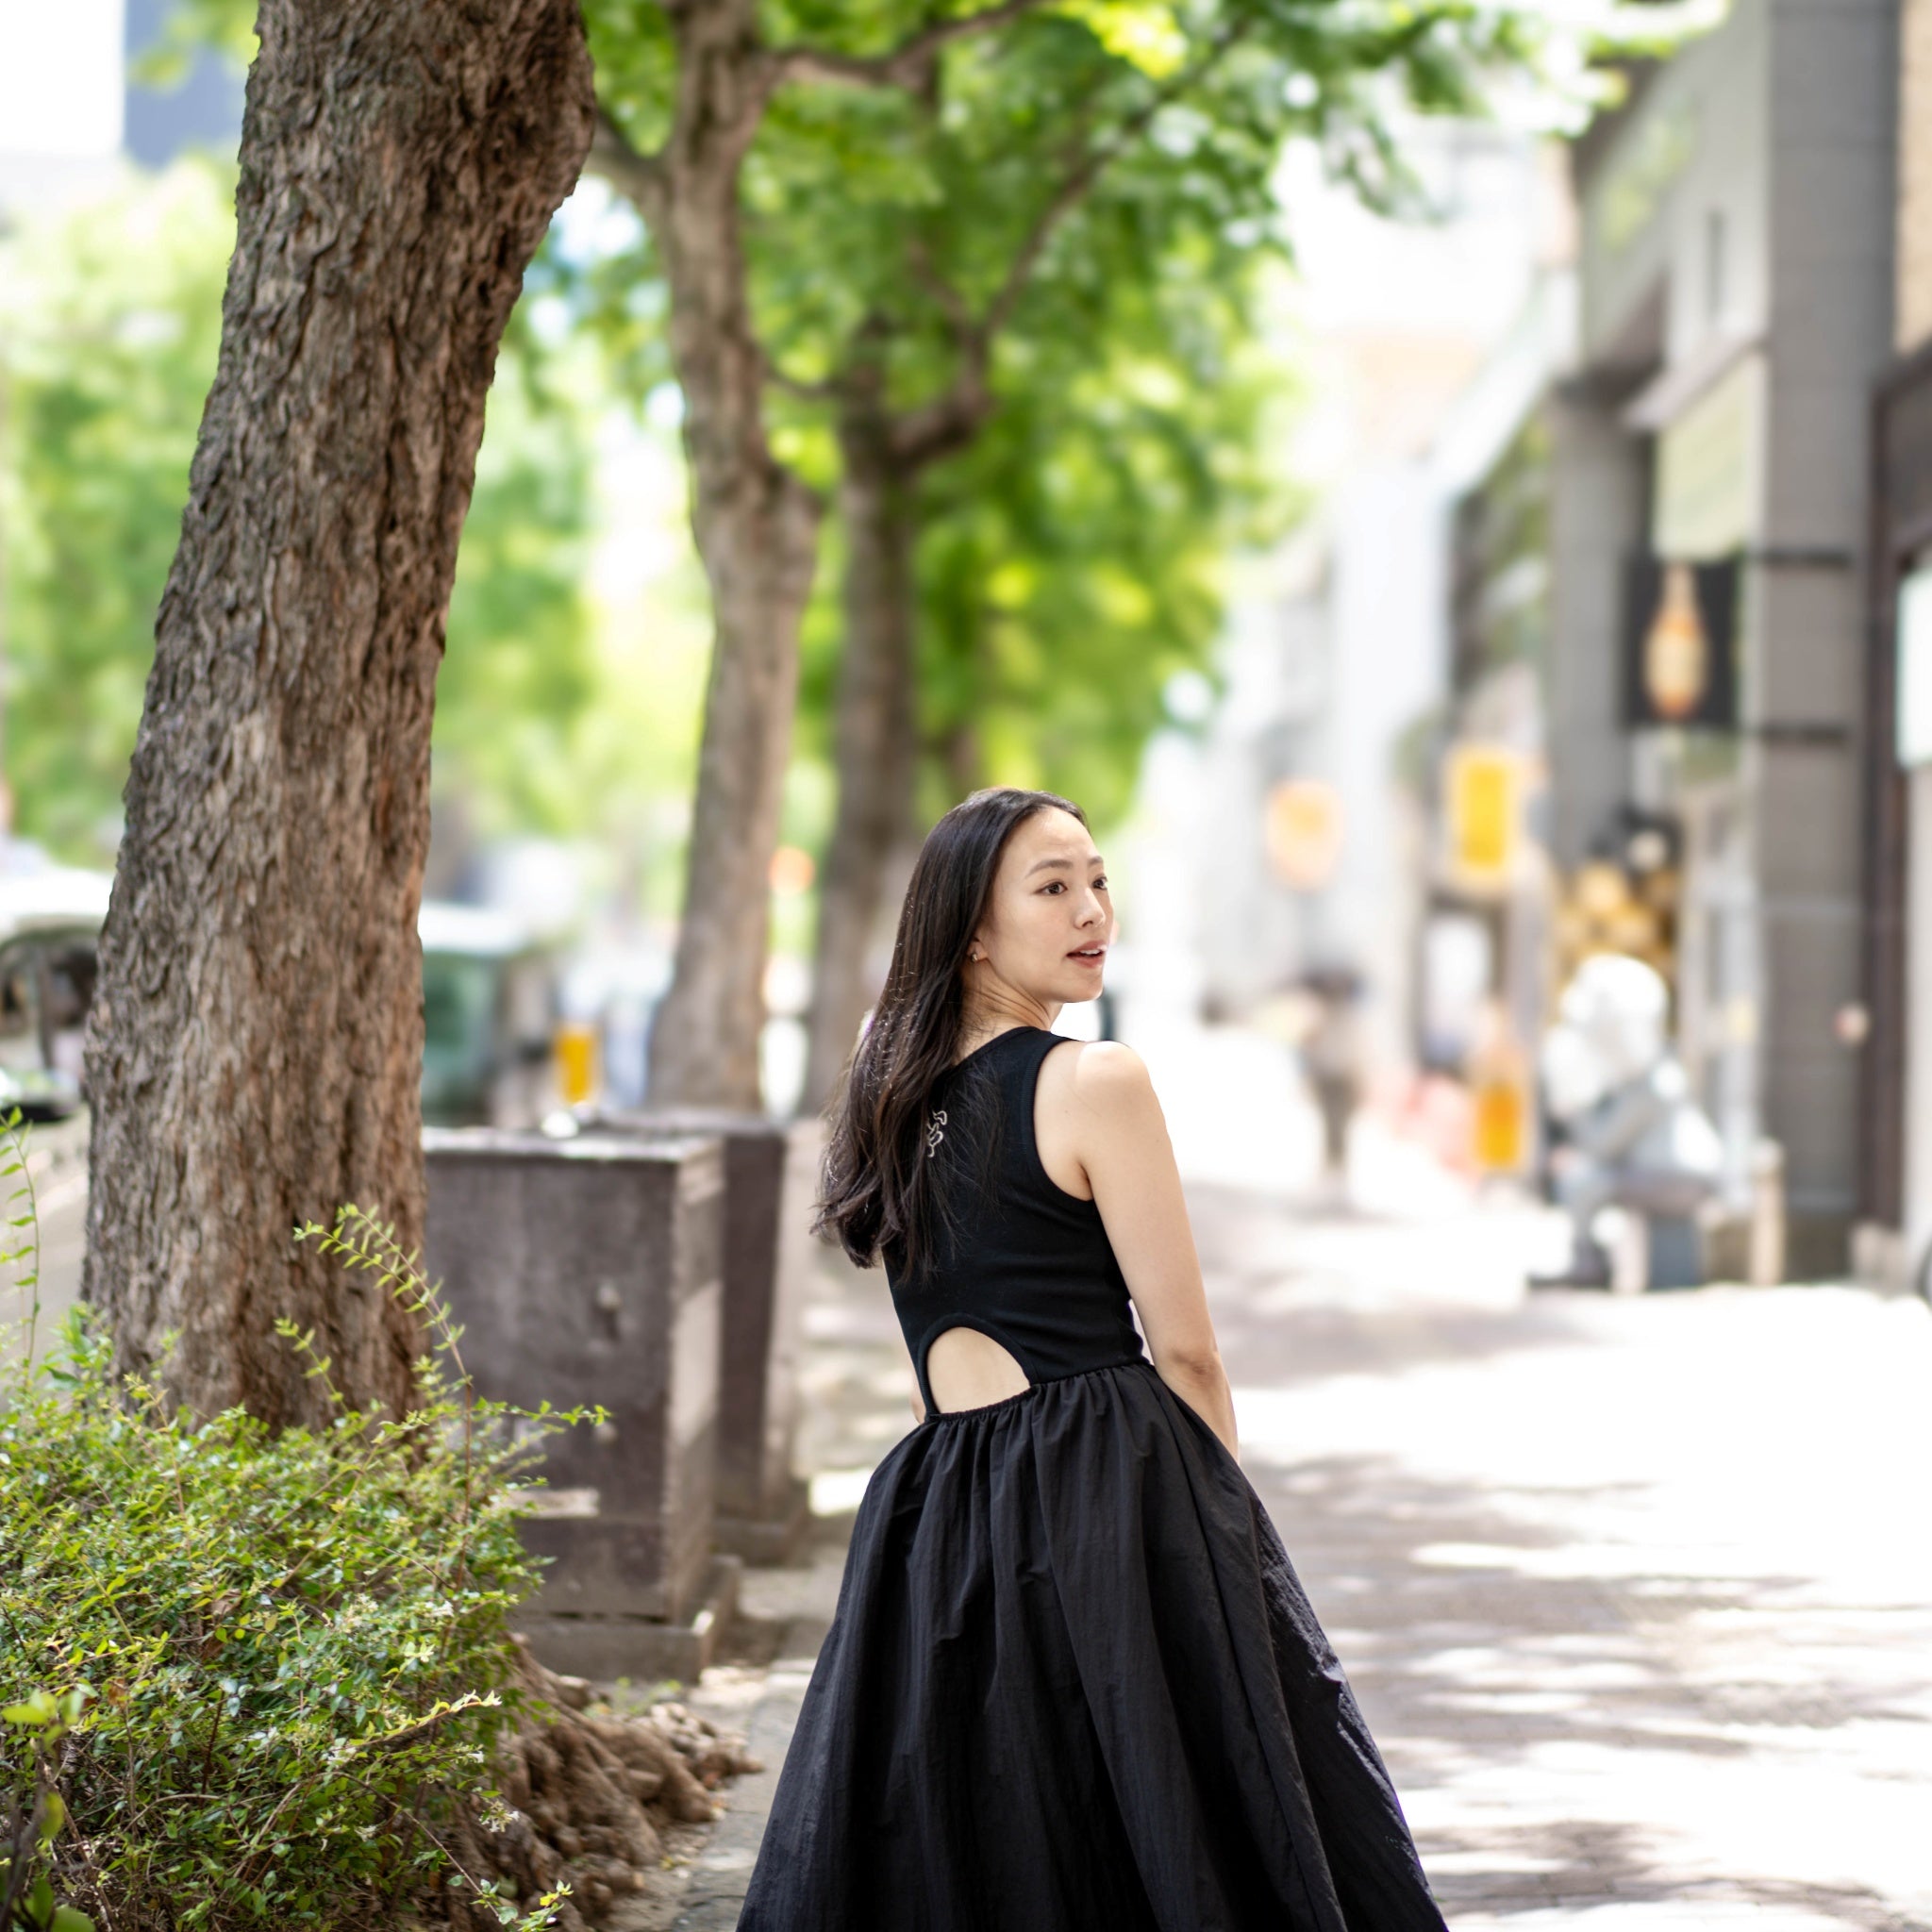 Name:Fit&Flare MATERIAL Dress | Color:Black【AMBERGLEAM_アンバーグリーム】|